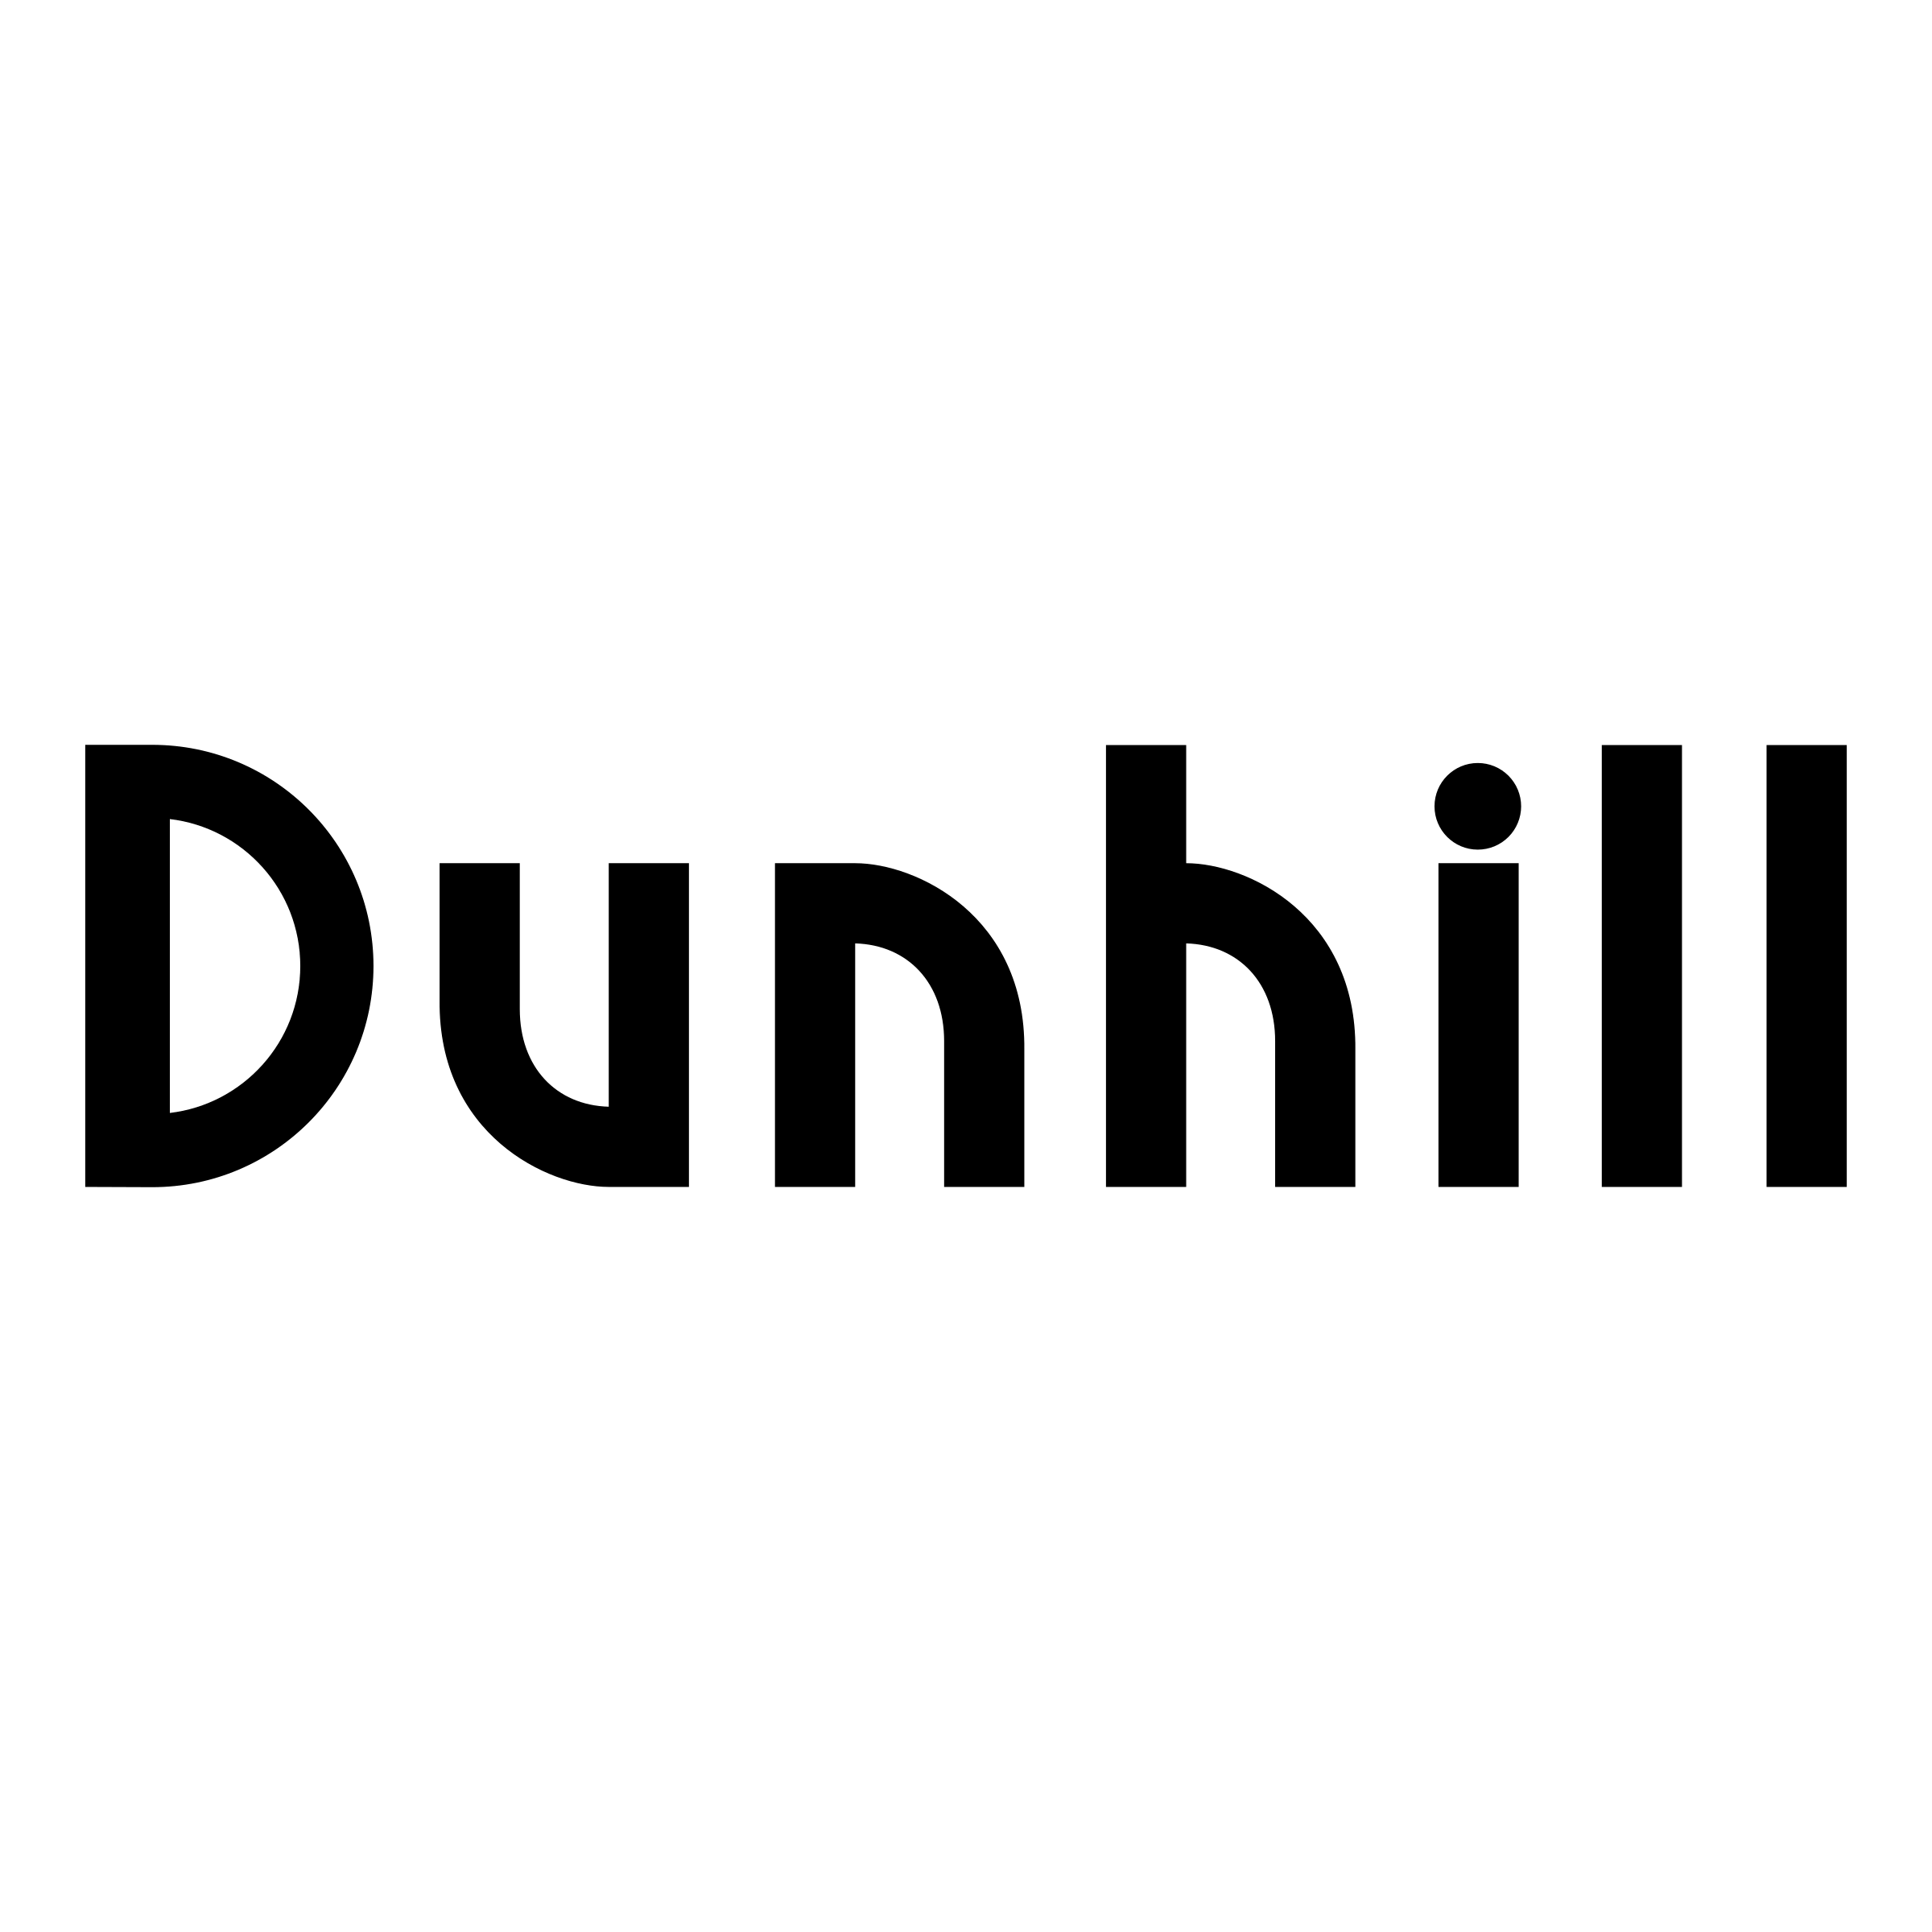 Dapulse Logo - Dunhill Logo PNG Transparent & SVG Vector - Freebie Supply